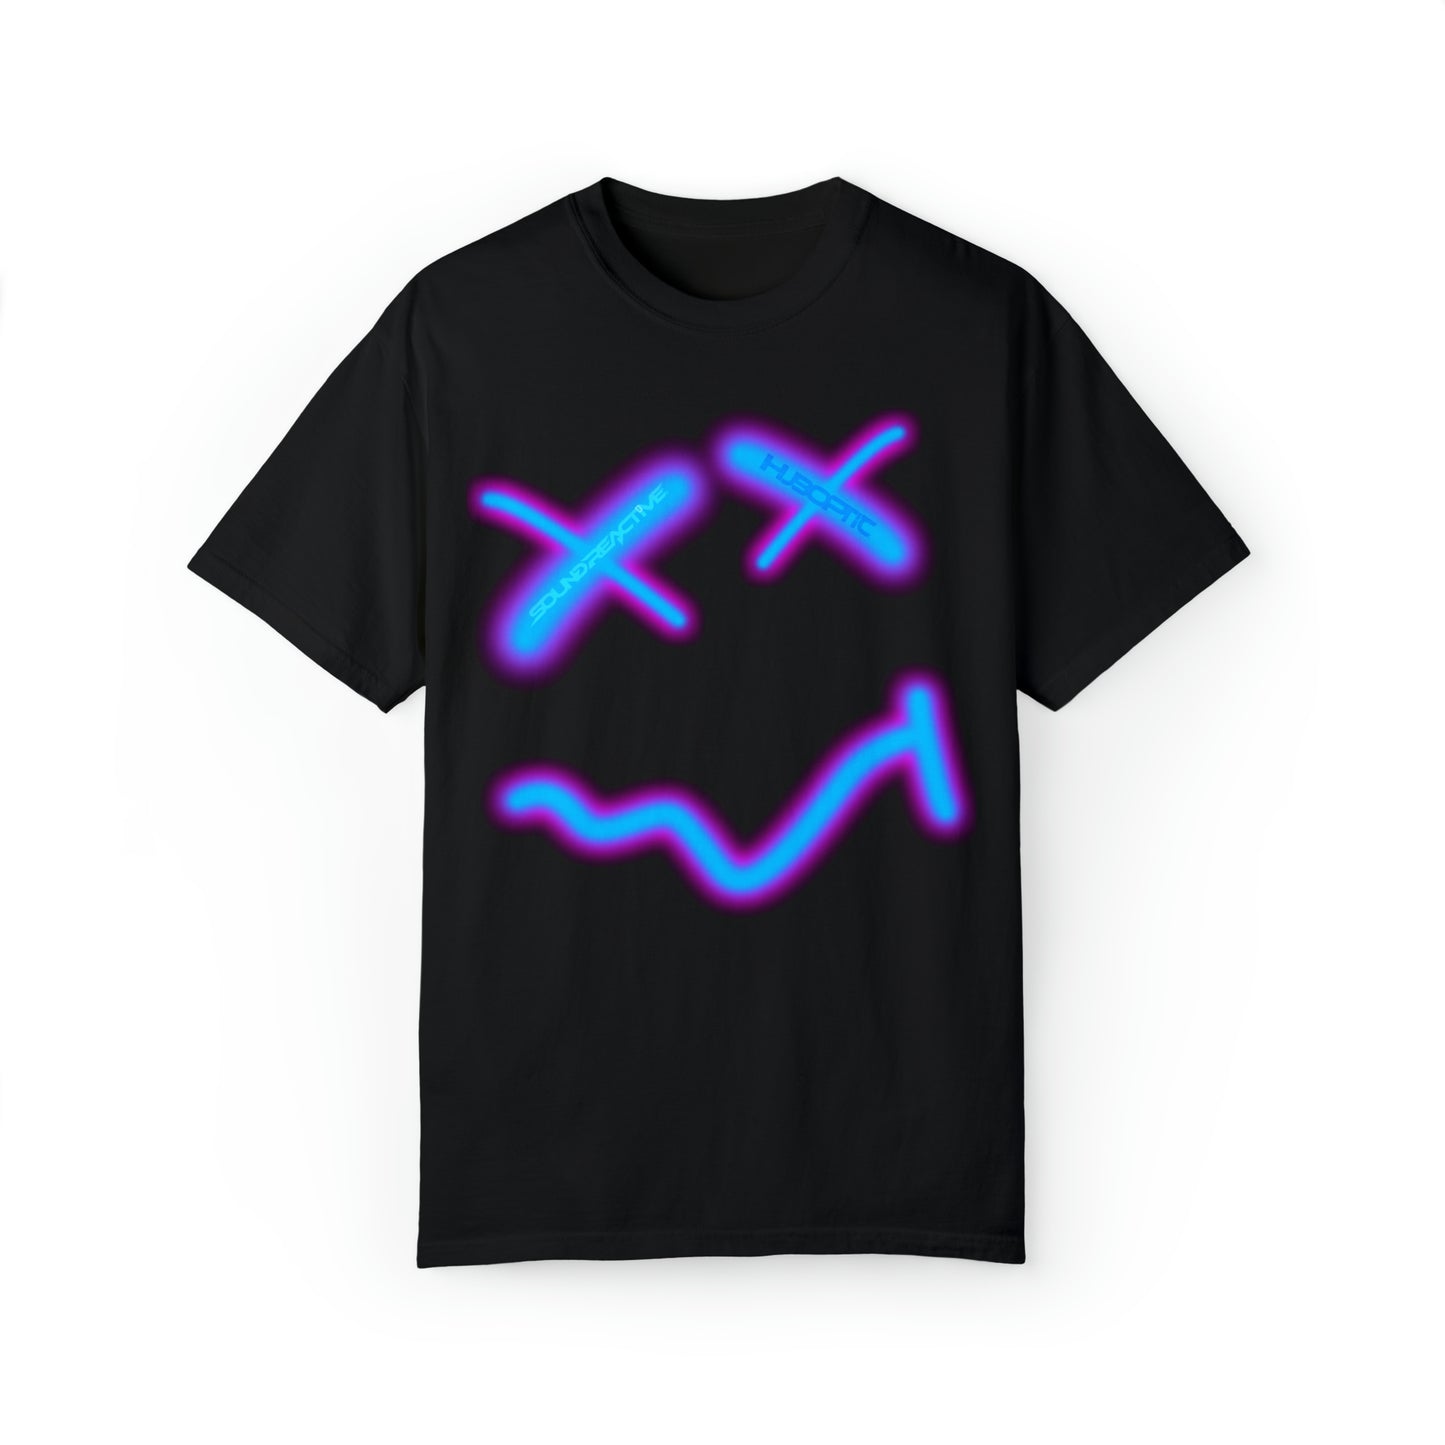 HUBOPTIC® Original Sound Reactive SMILEY V1 Electro Graphic T-shirt